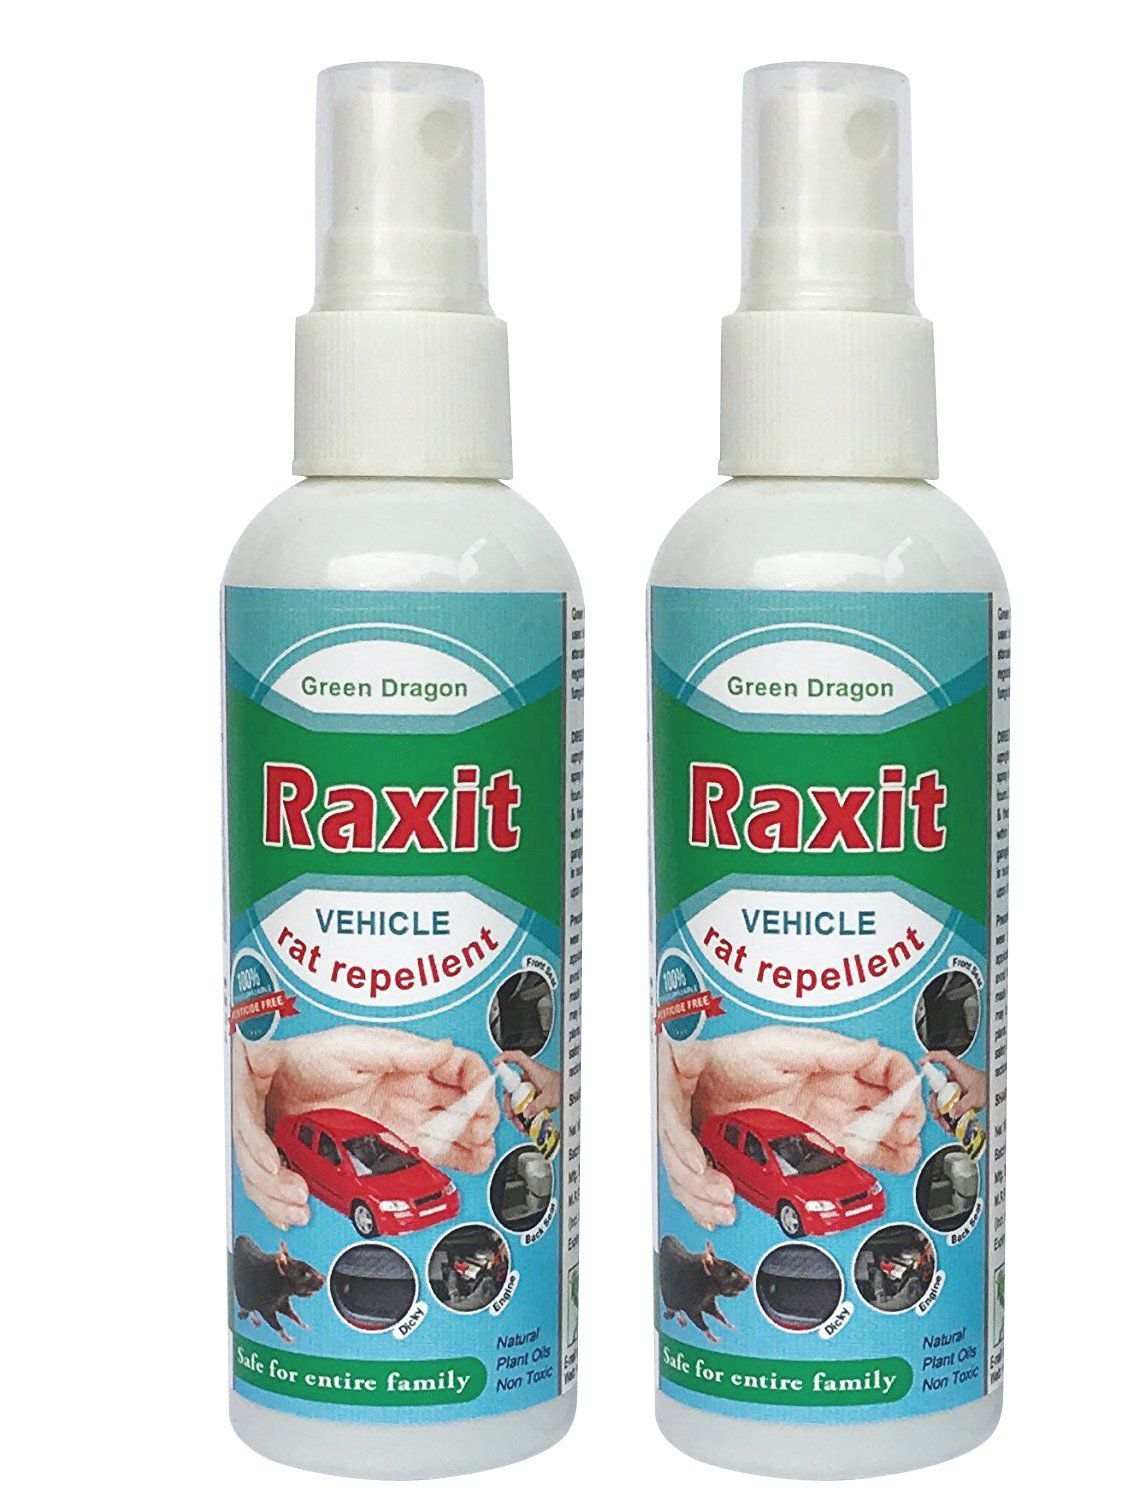     			Green Dragon's Raxit (Organic Vehicle Rat Repellent combo pack)